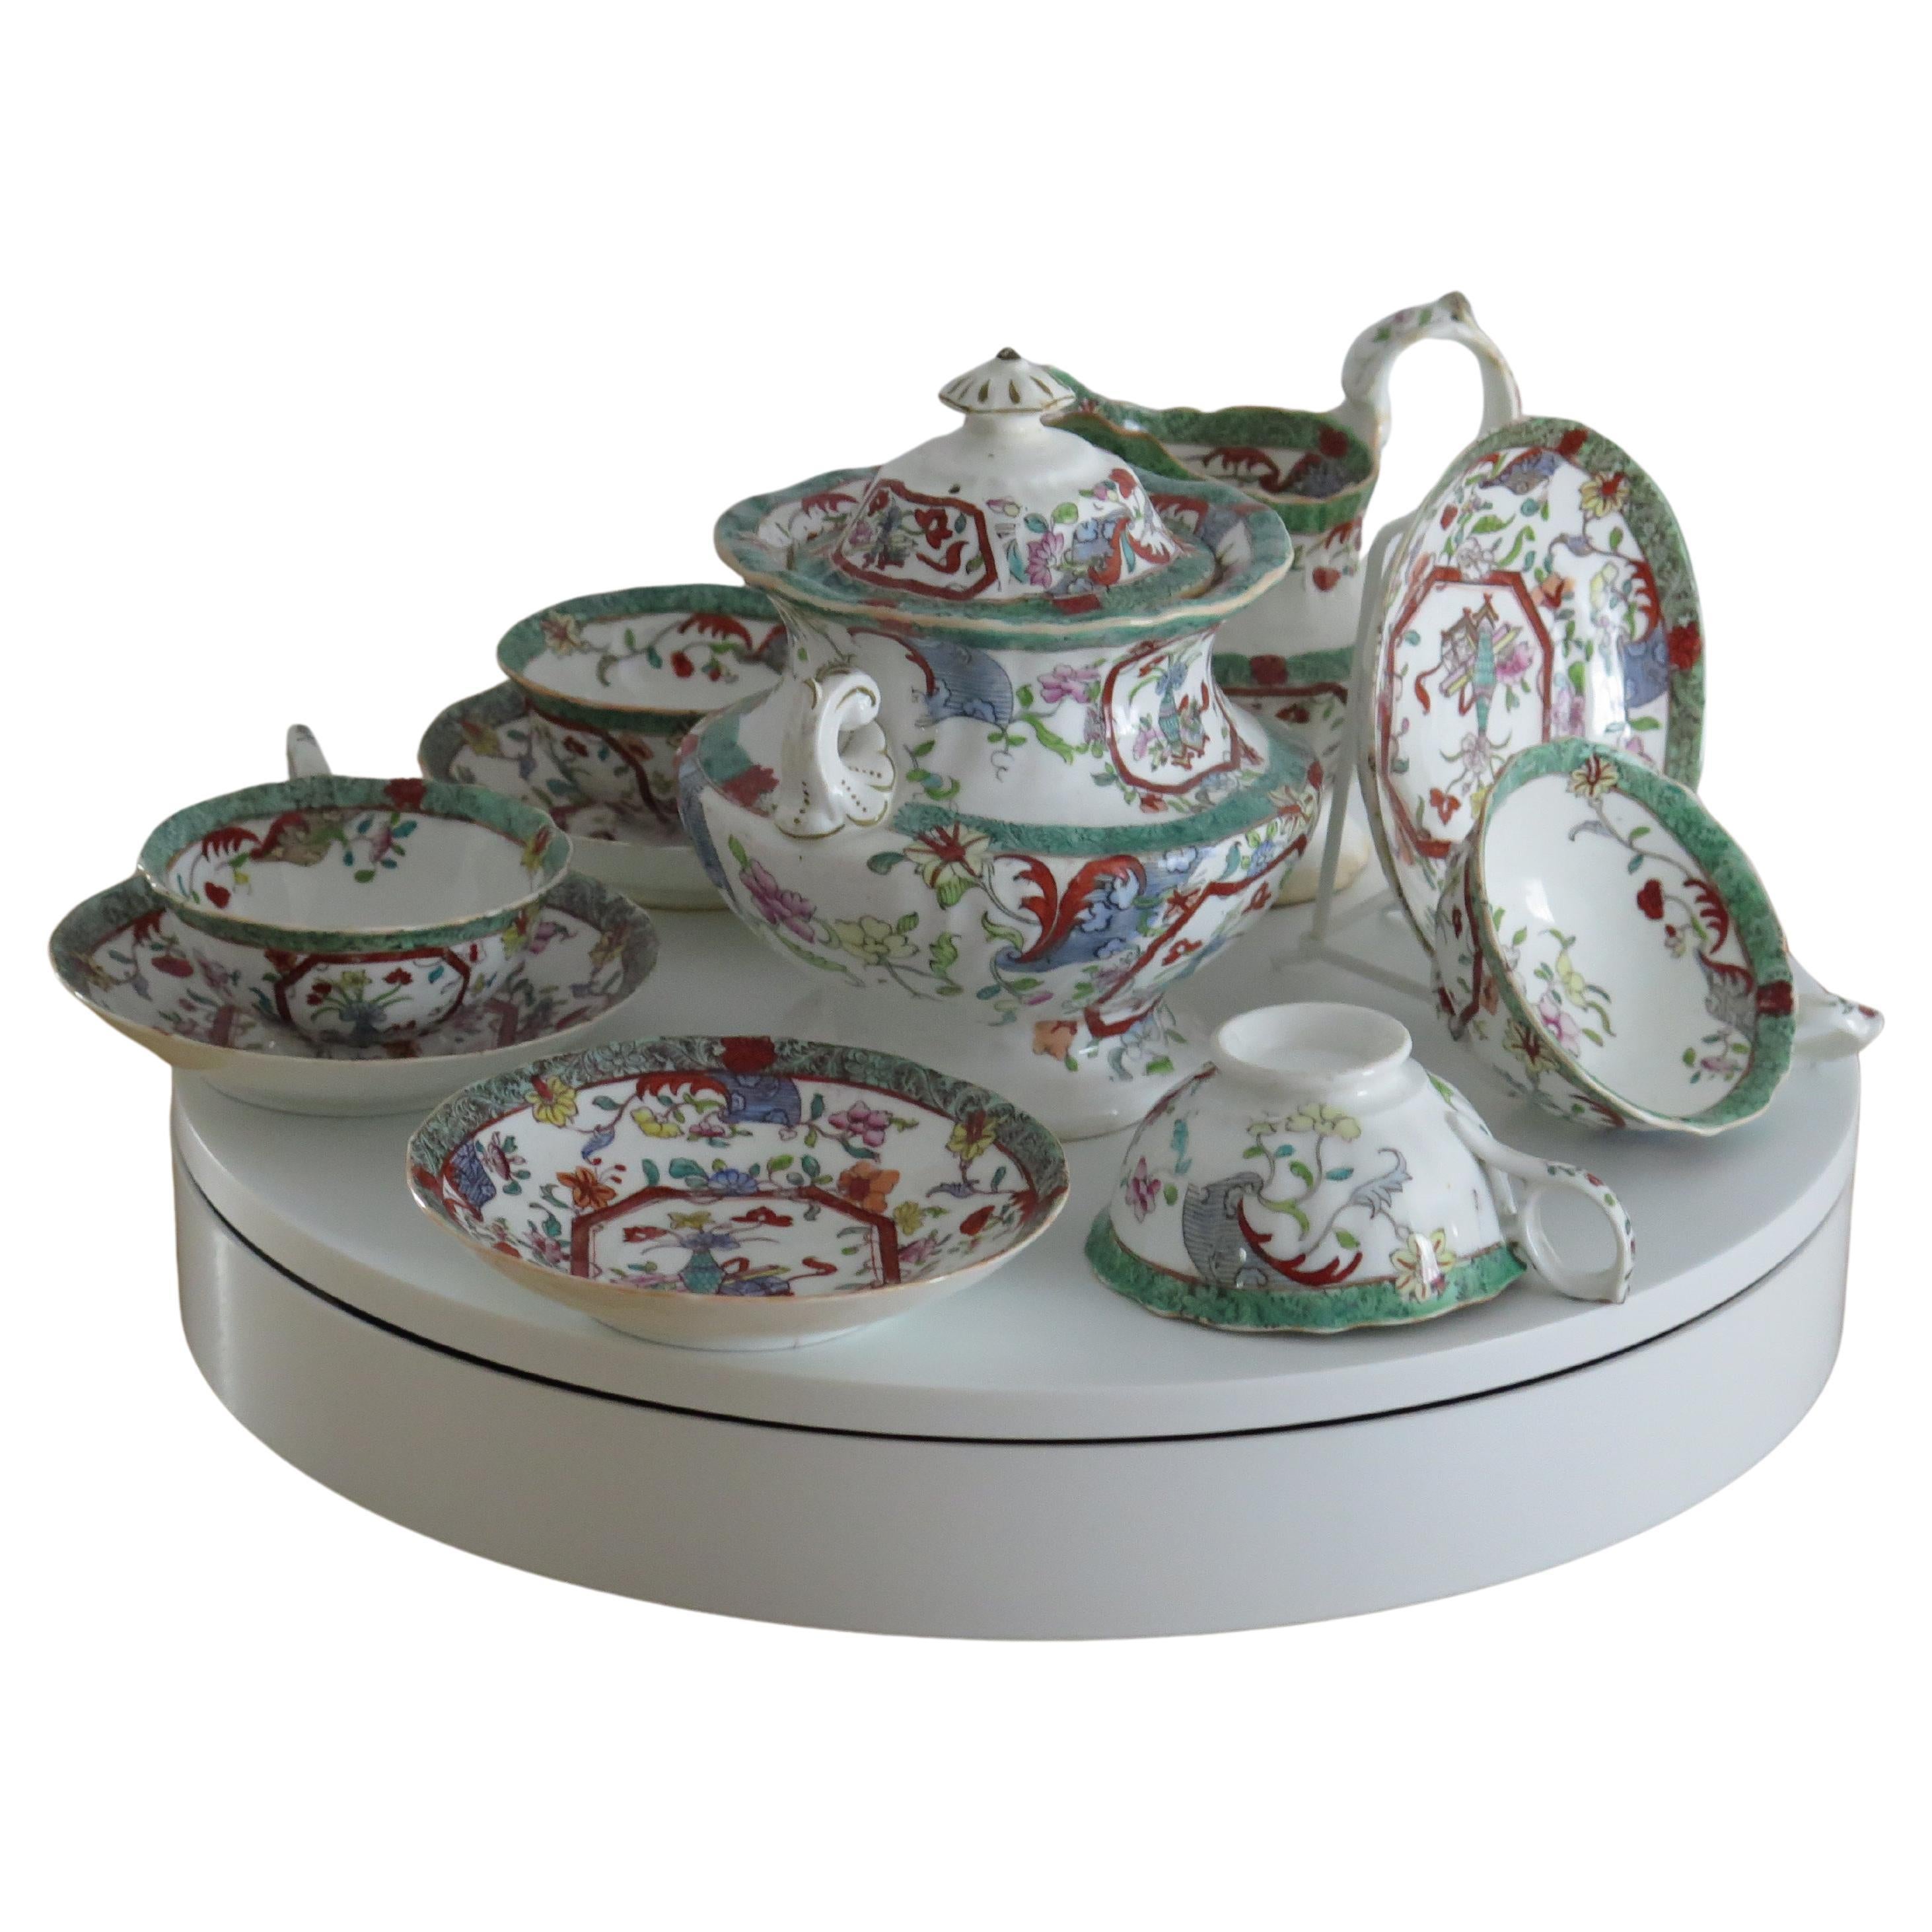 William IVth Mason’s Tea Set 10 Pieces Porcelain Pattern 223, English circa 1830